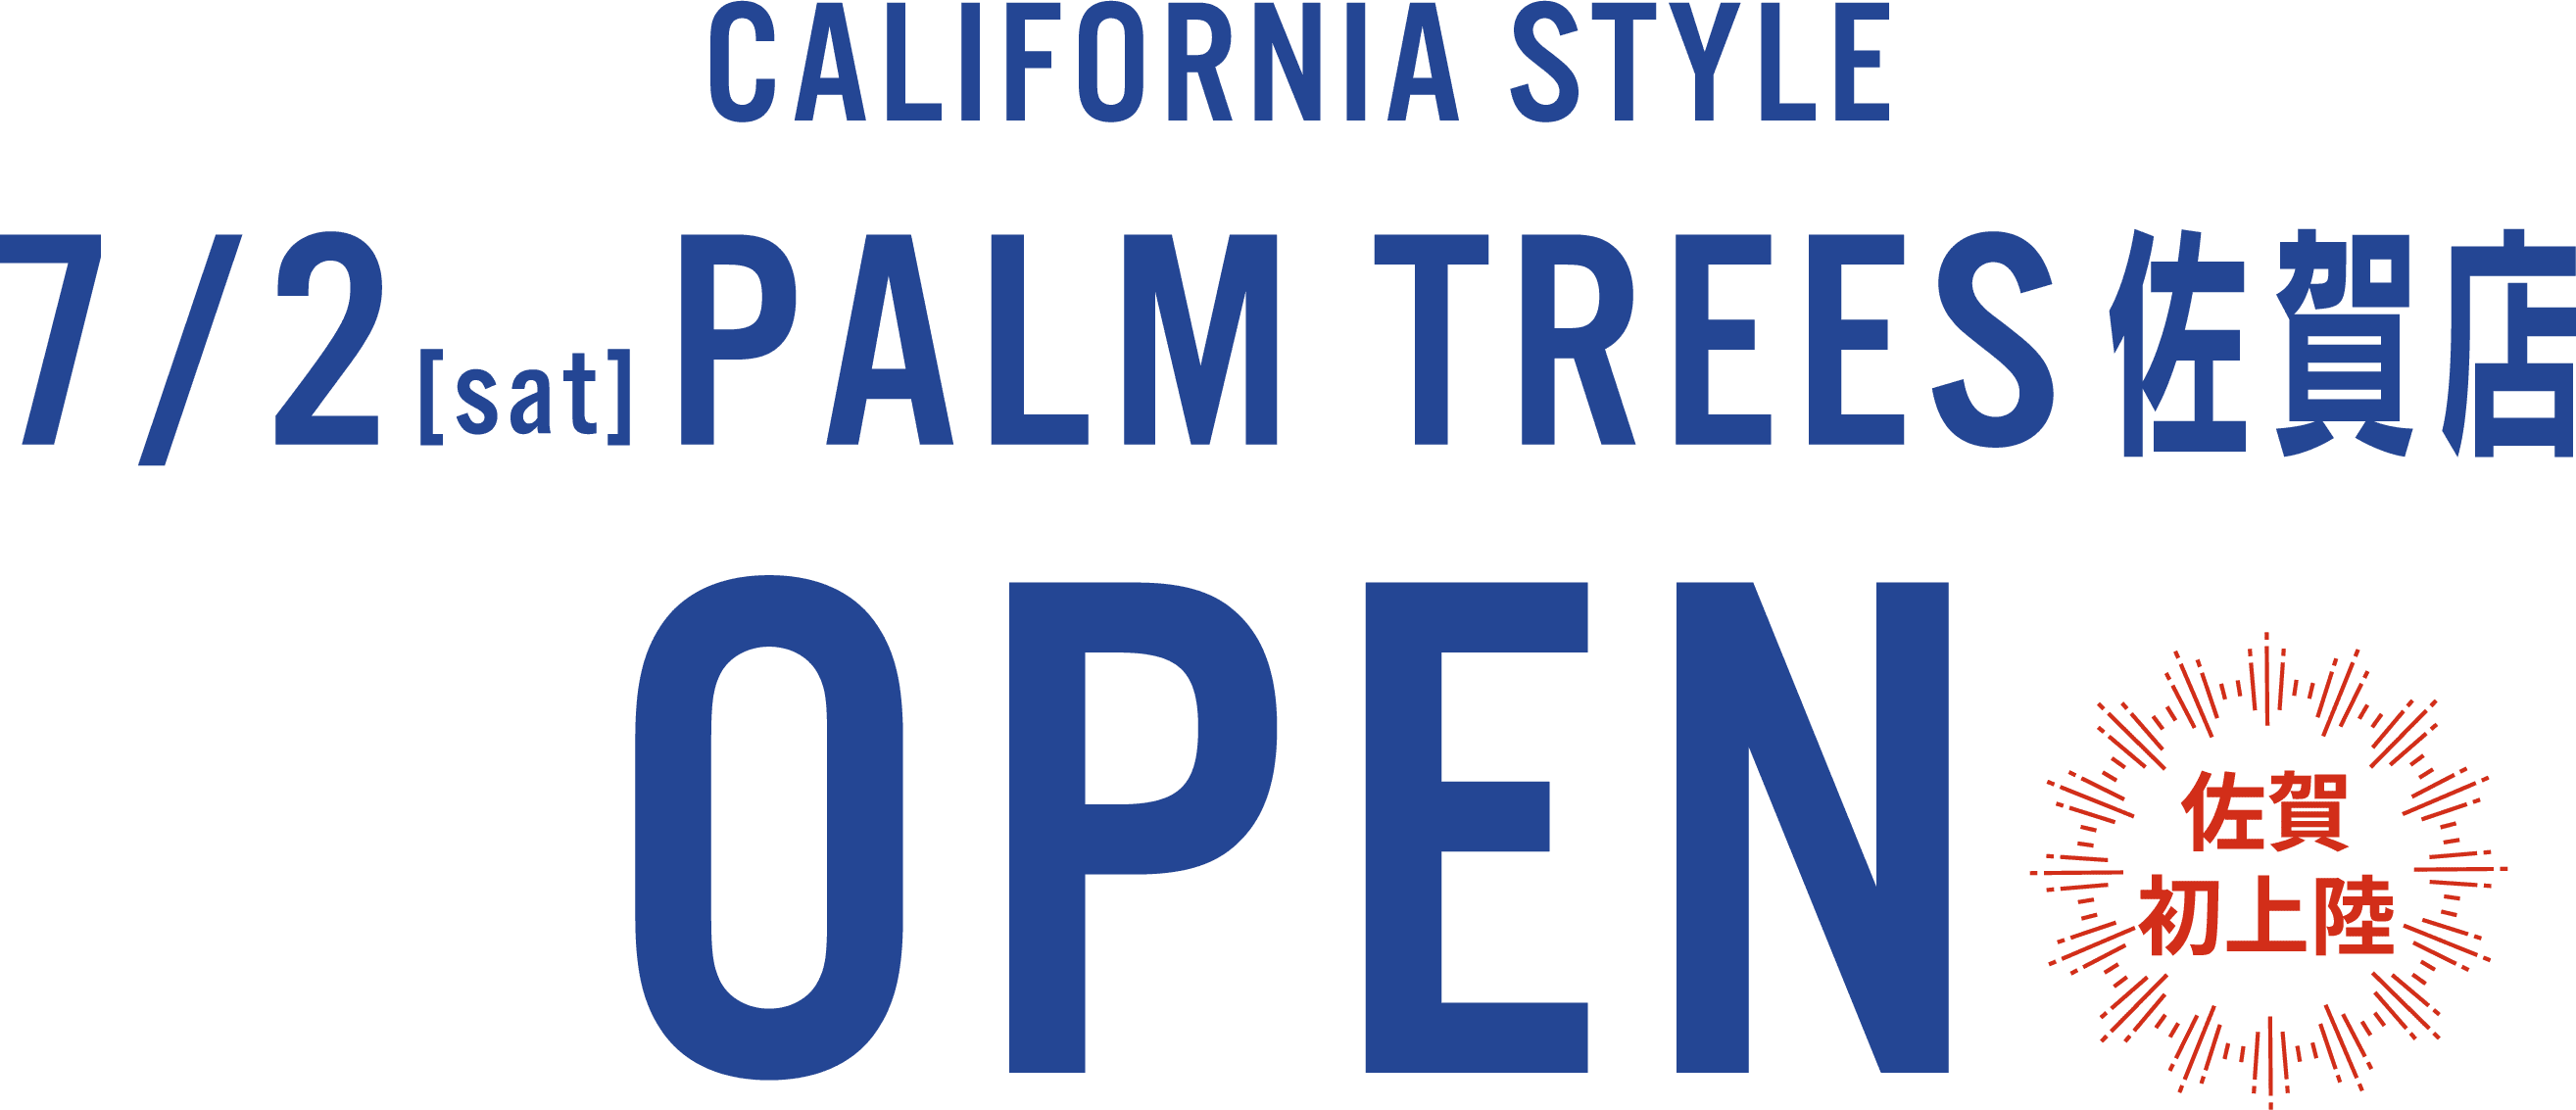 CALIFORNIA STYLE 7/2[sat]PALM TREES佐賀店 OPEN 佐賀初上陸